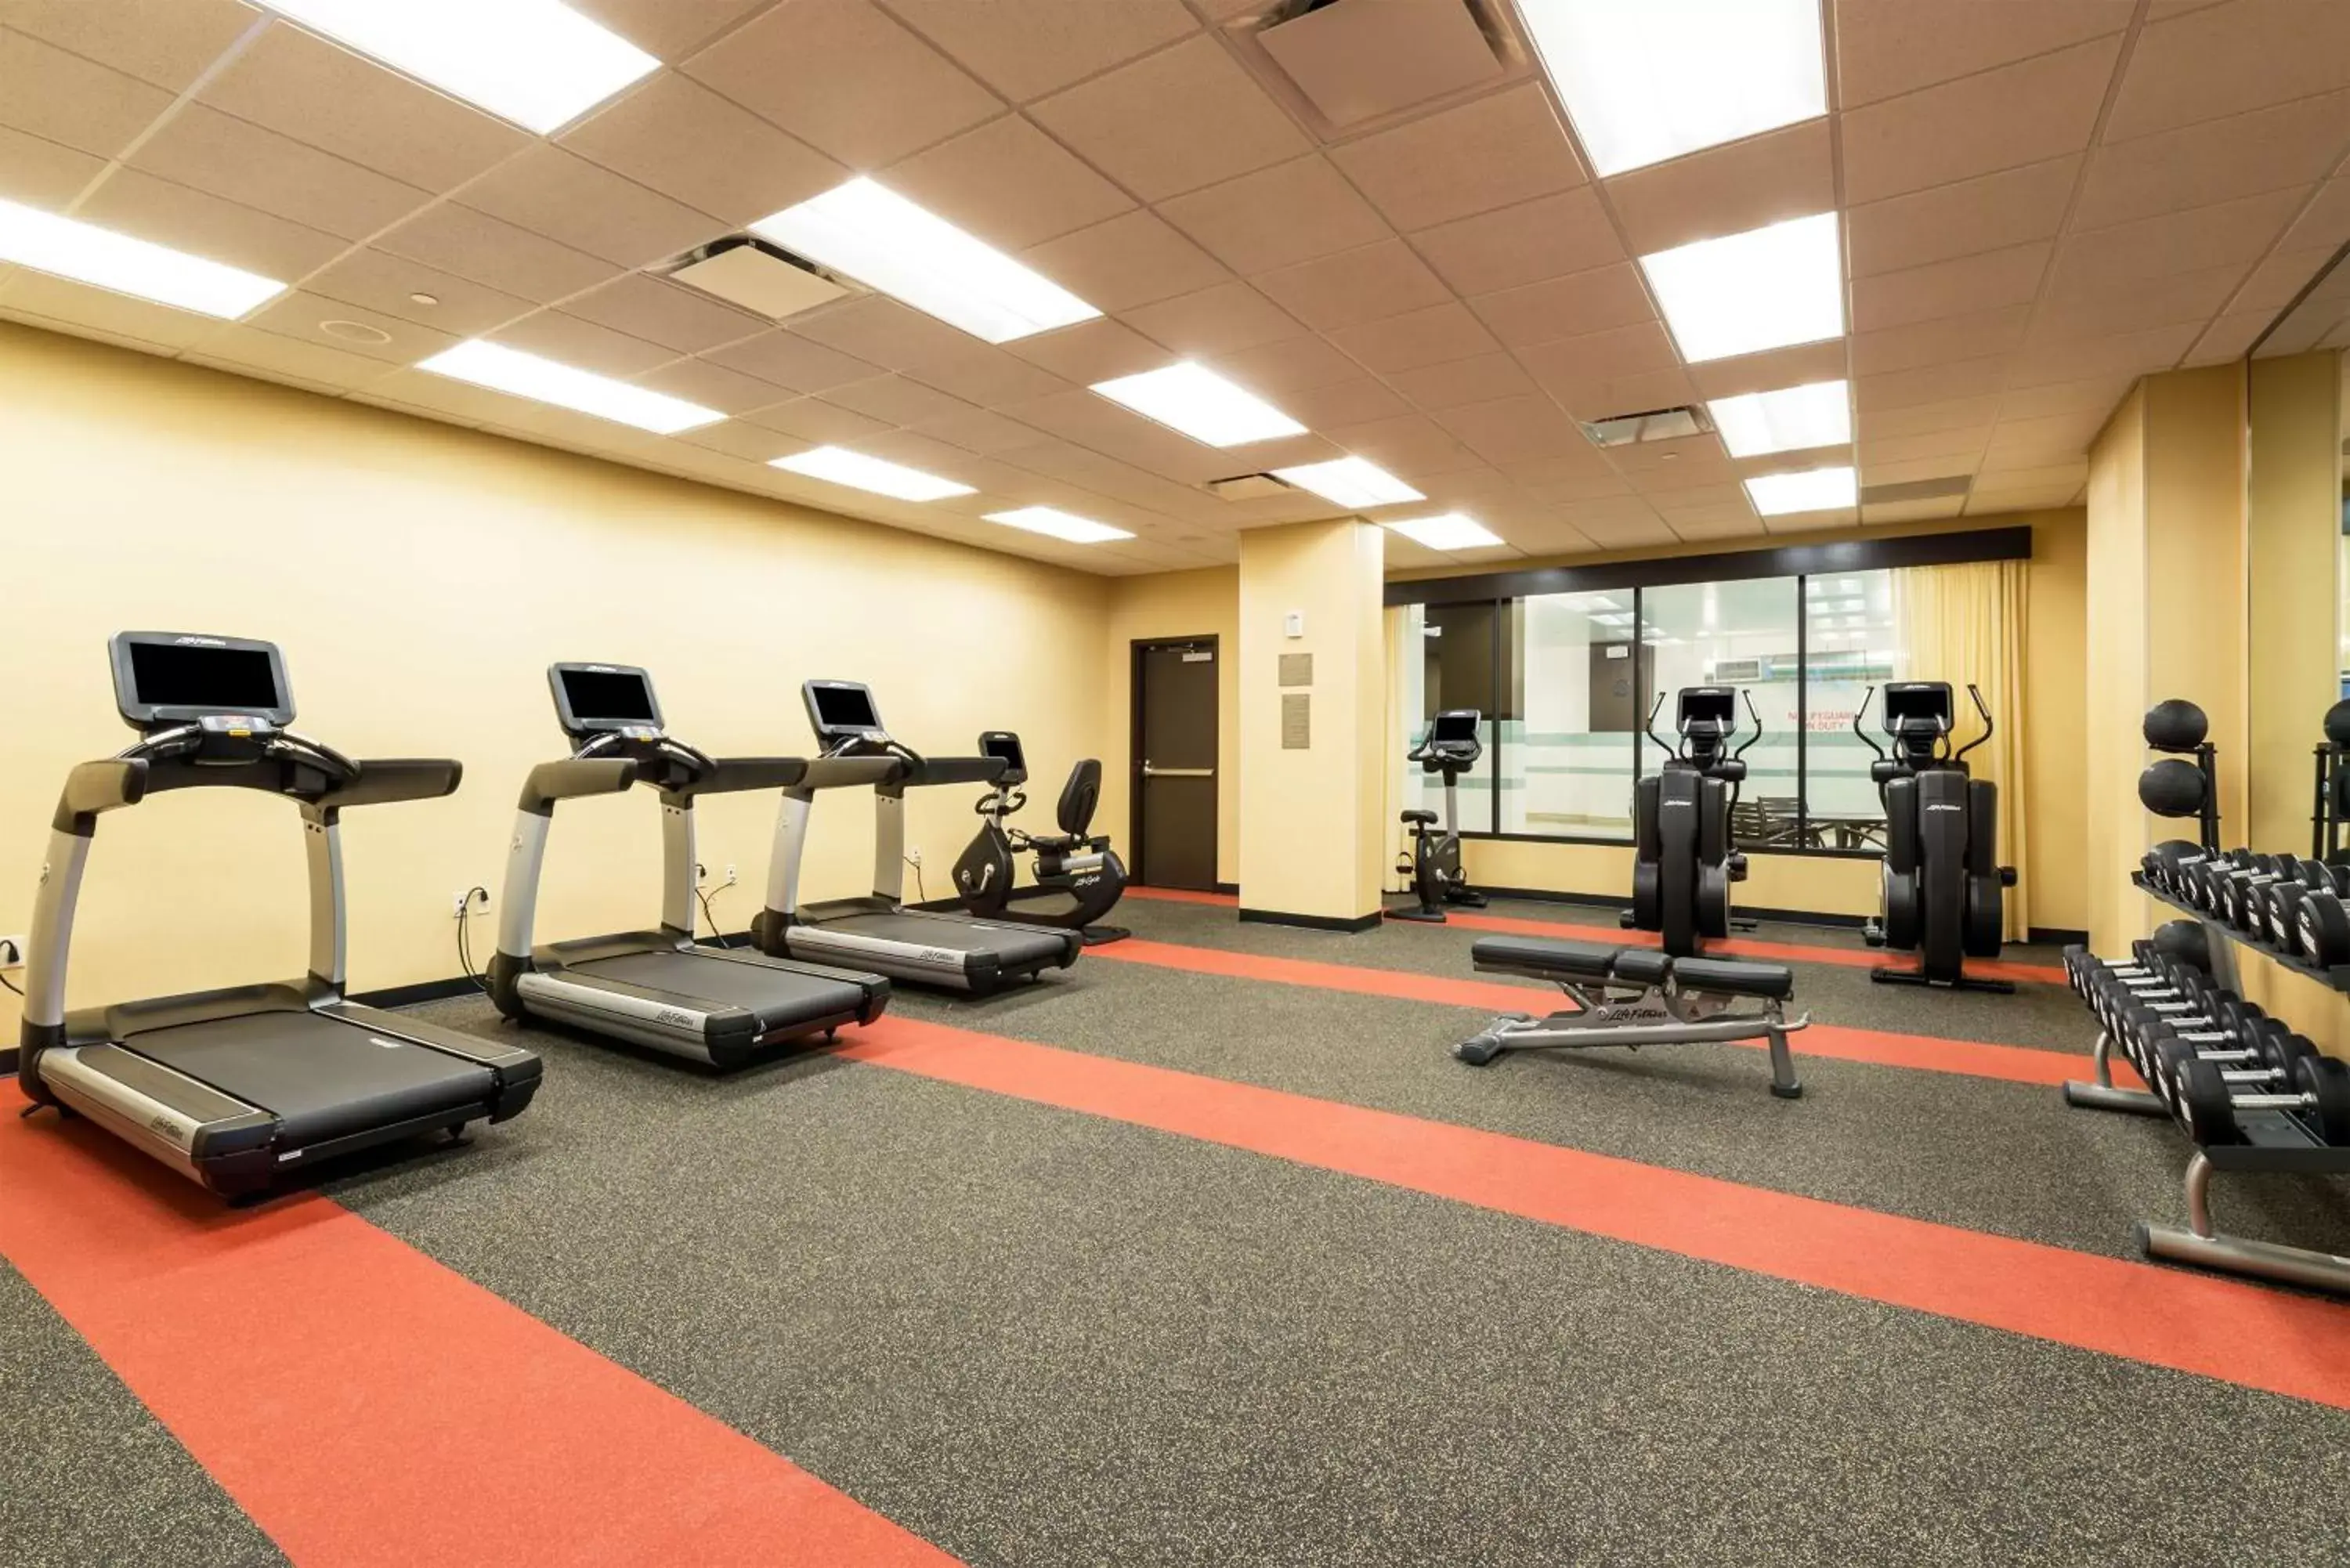 Fitness centre/facilities, Fitness Center/Facilities in Hyatt Place Nashville Downtown